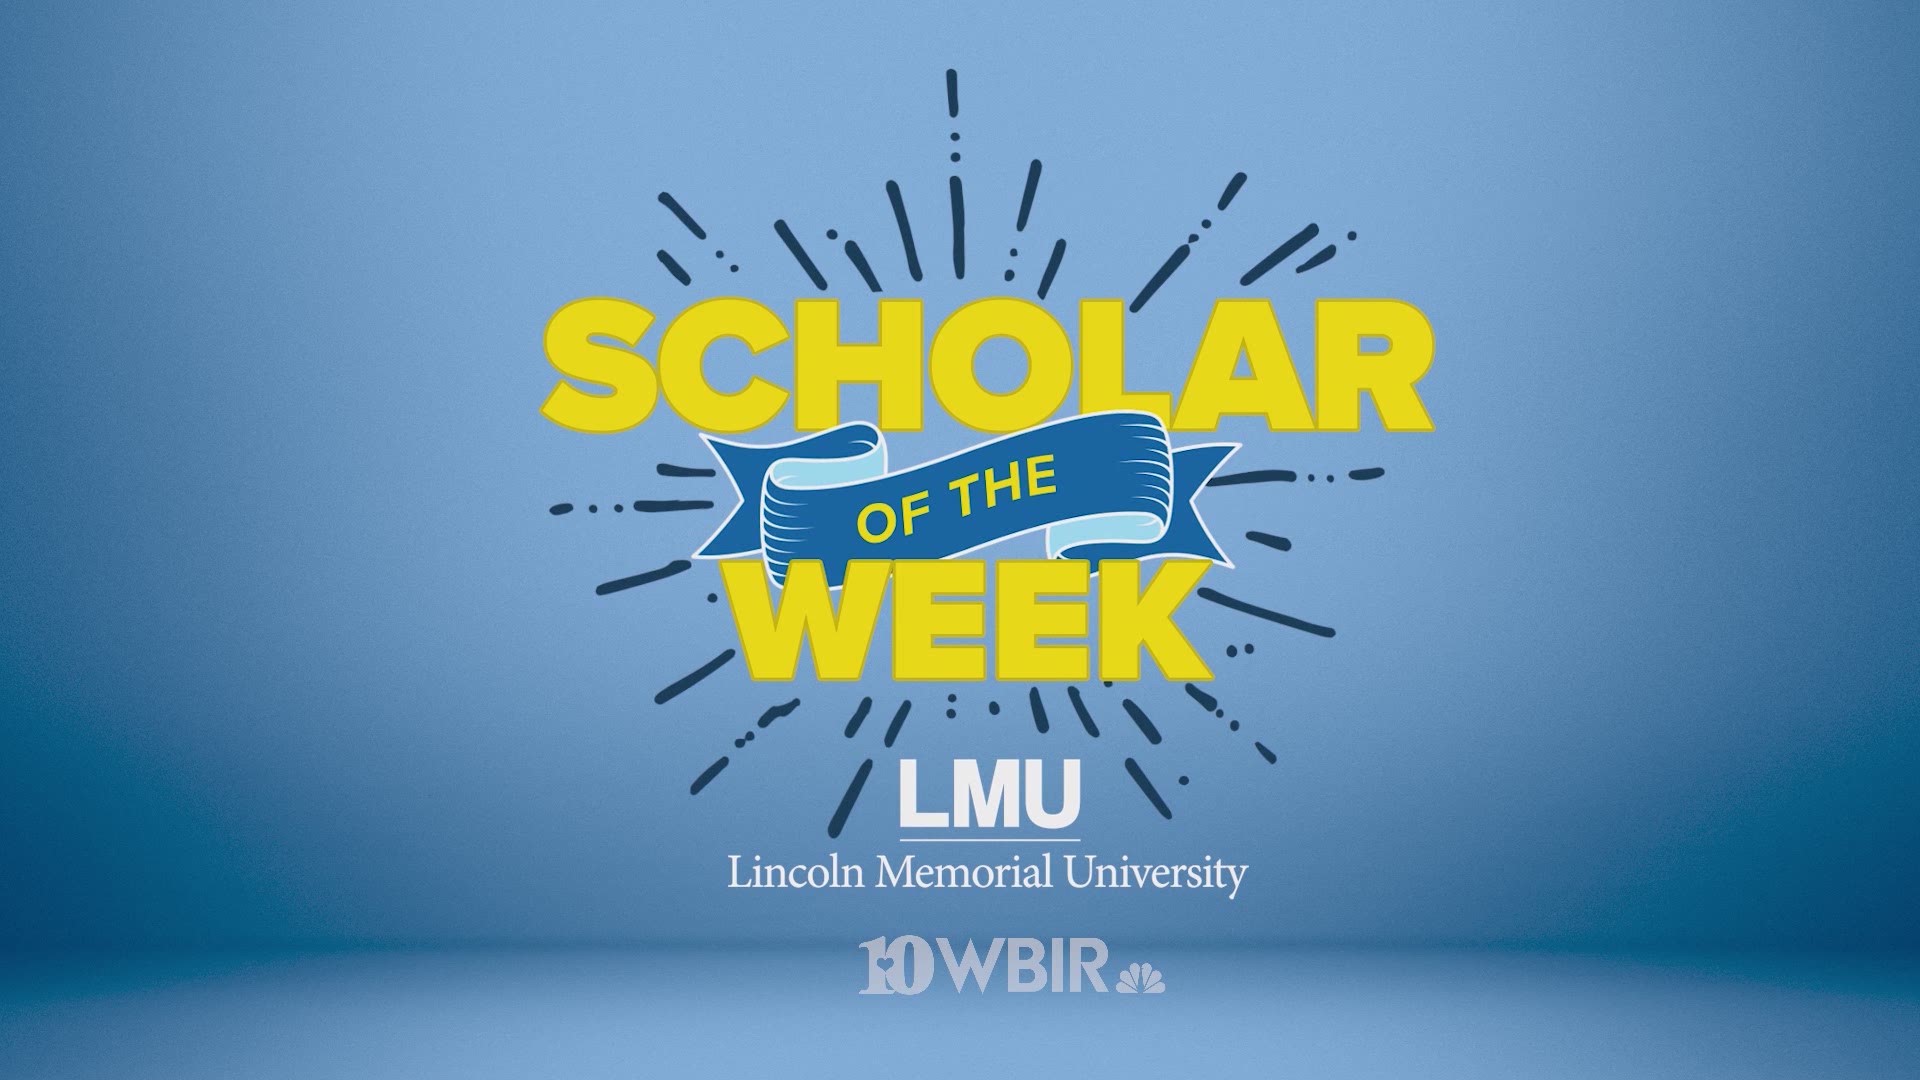 Scholar of the Week is Christopher Lemons